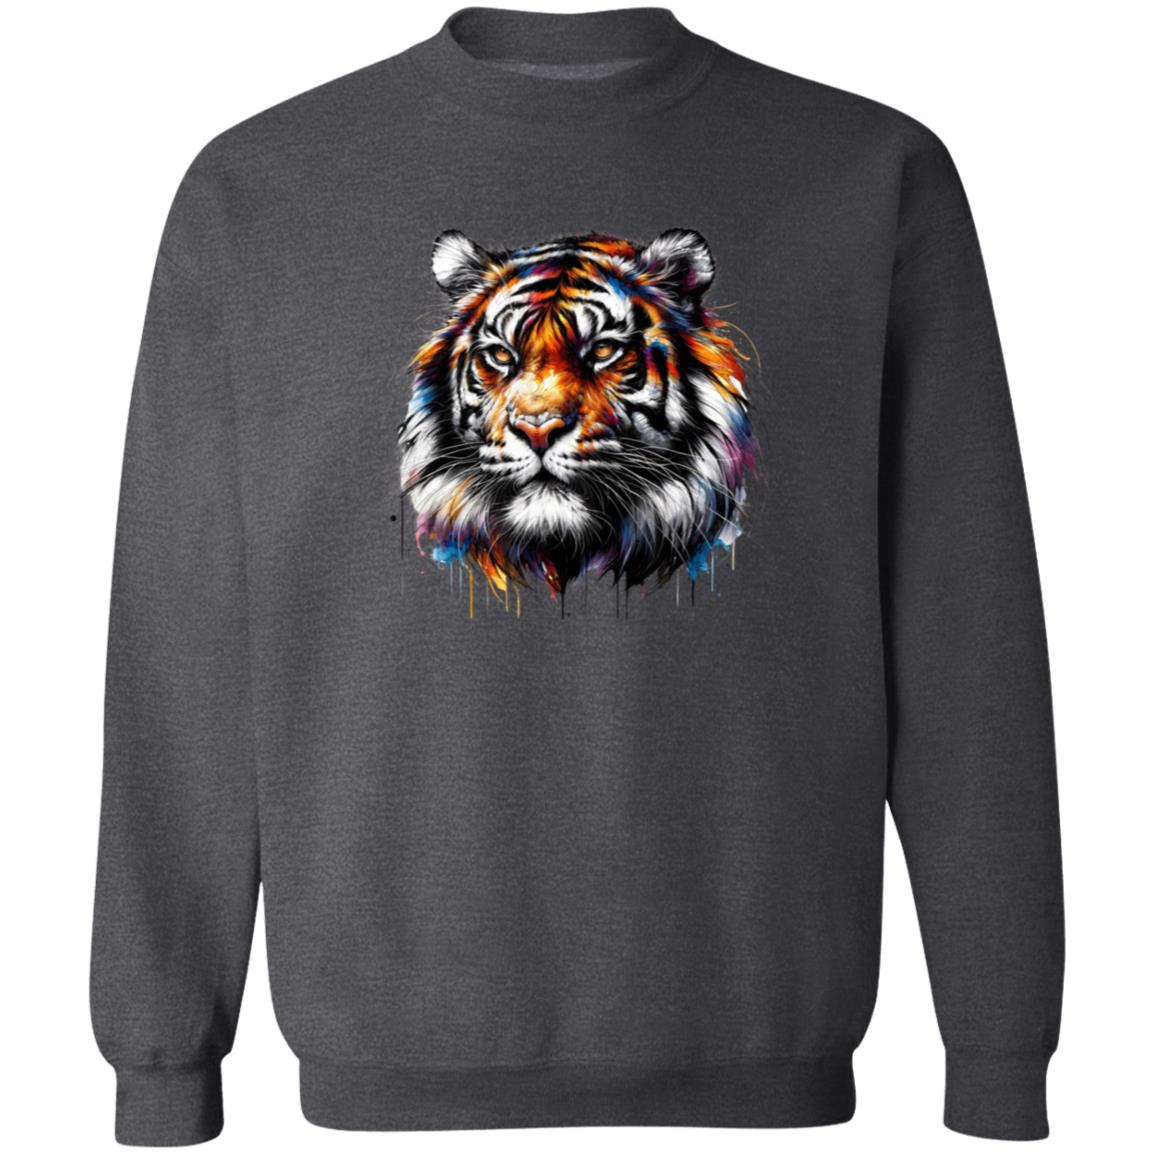 Vibrant Tiger Unisex Sweatshirt Animal lover crewneck Black Navy Dark Heather-Family-Gift-Planet